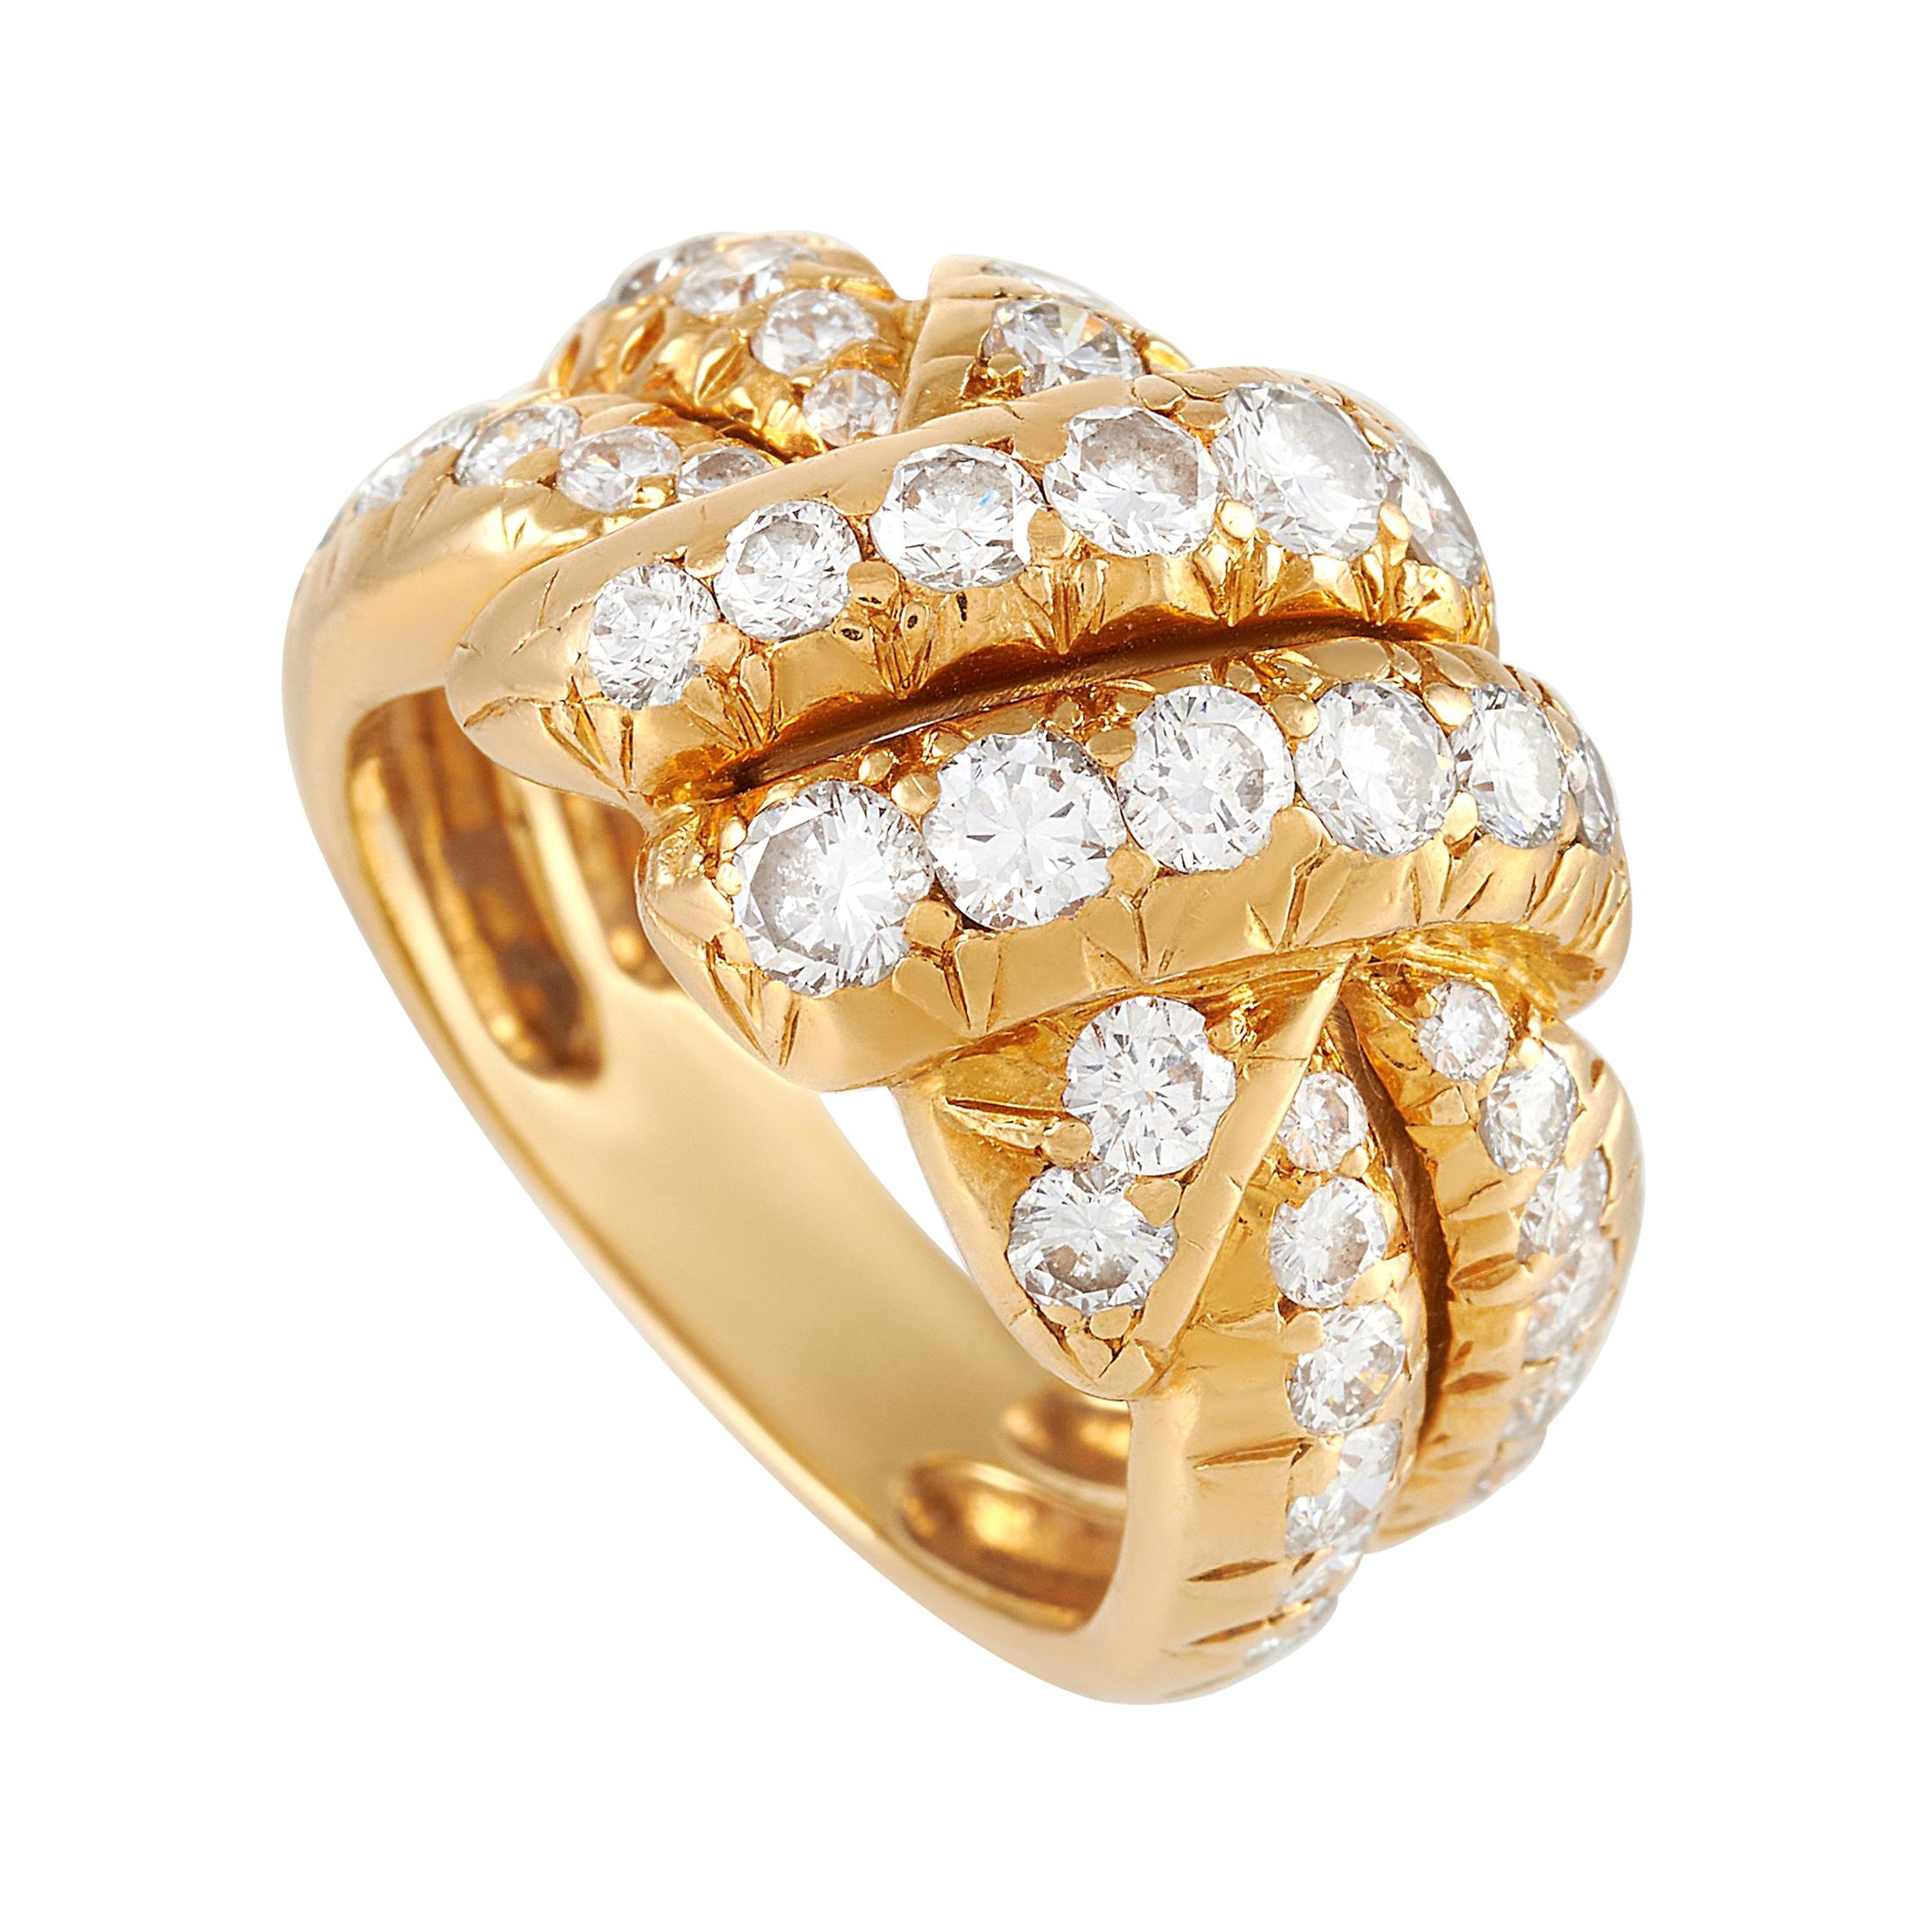 Van Cleef & Arpels 18k Yellow Gold 1.75 Ct Diamond Ring